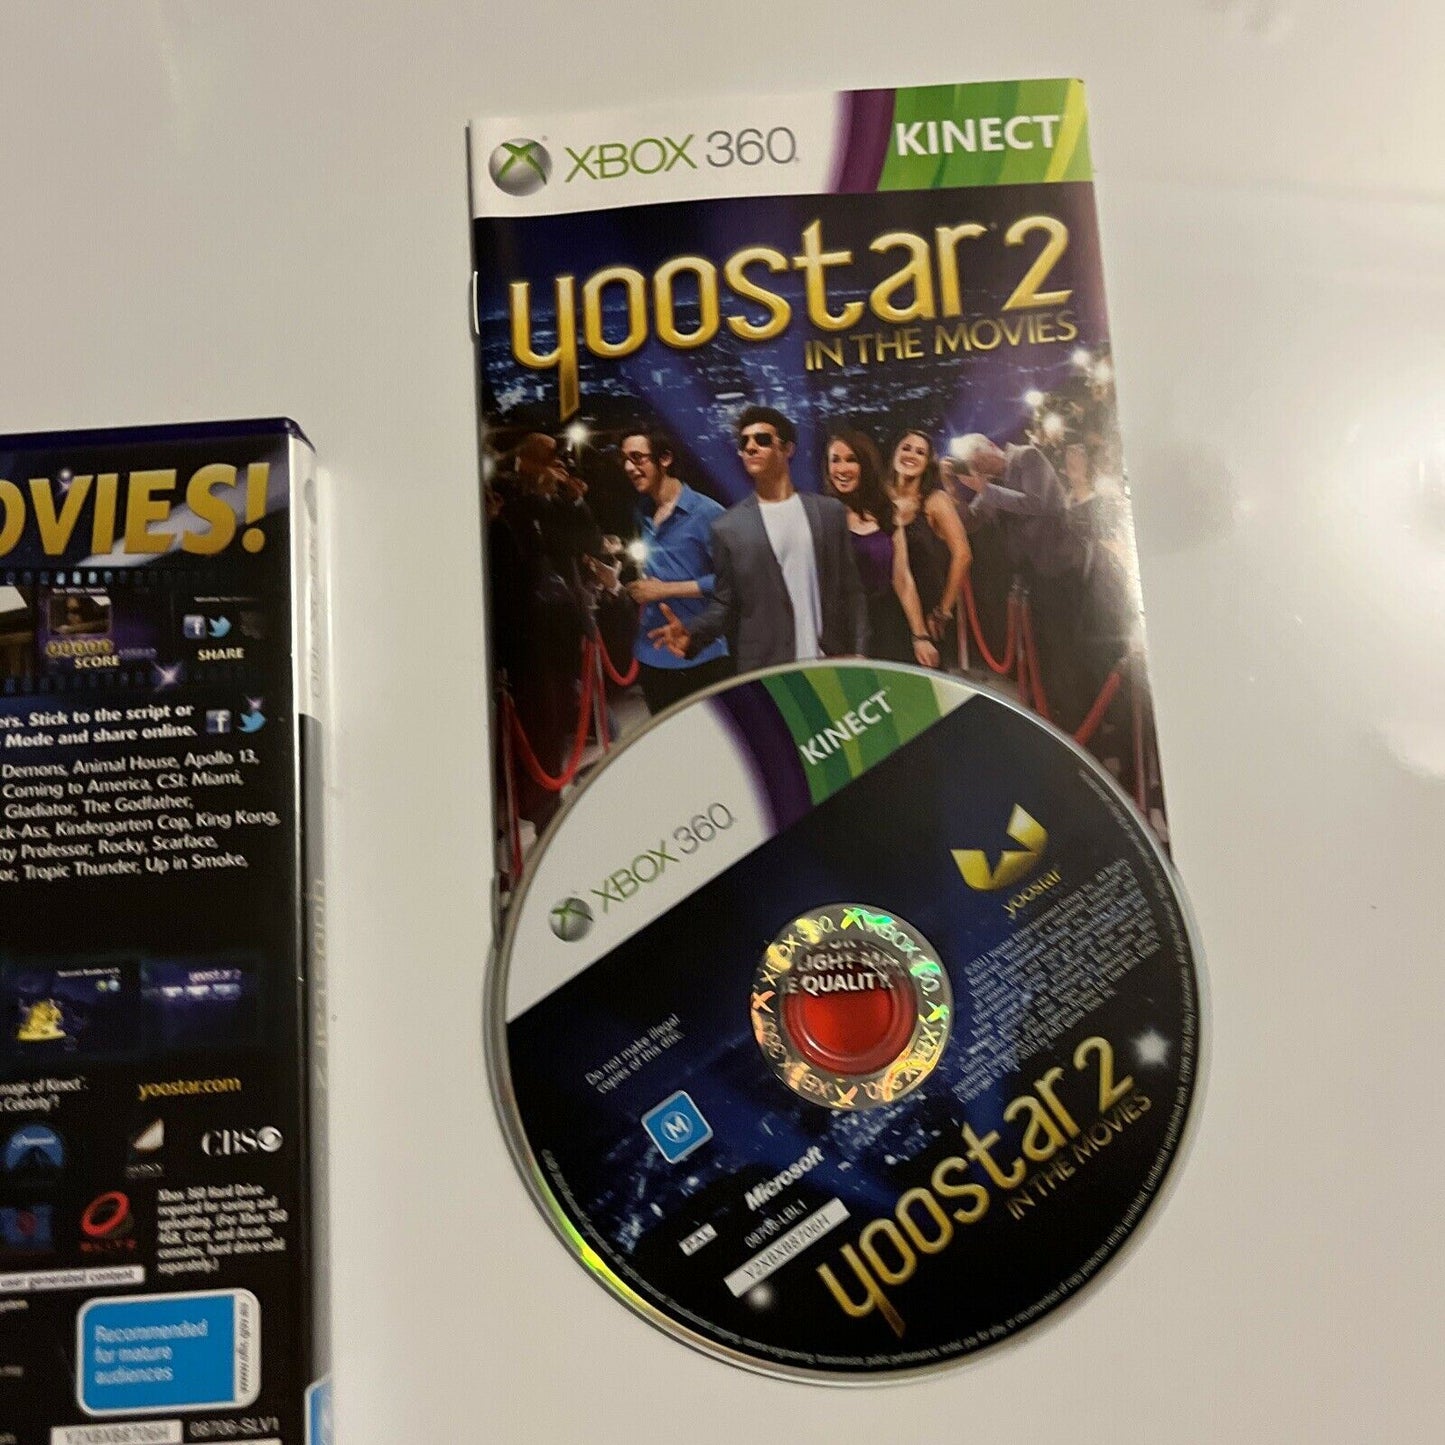 Yoostar 2 In The Movies - Microsoft Xbox 360 - PAL Manual